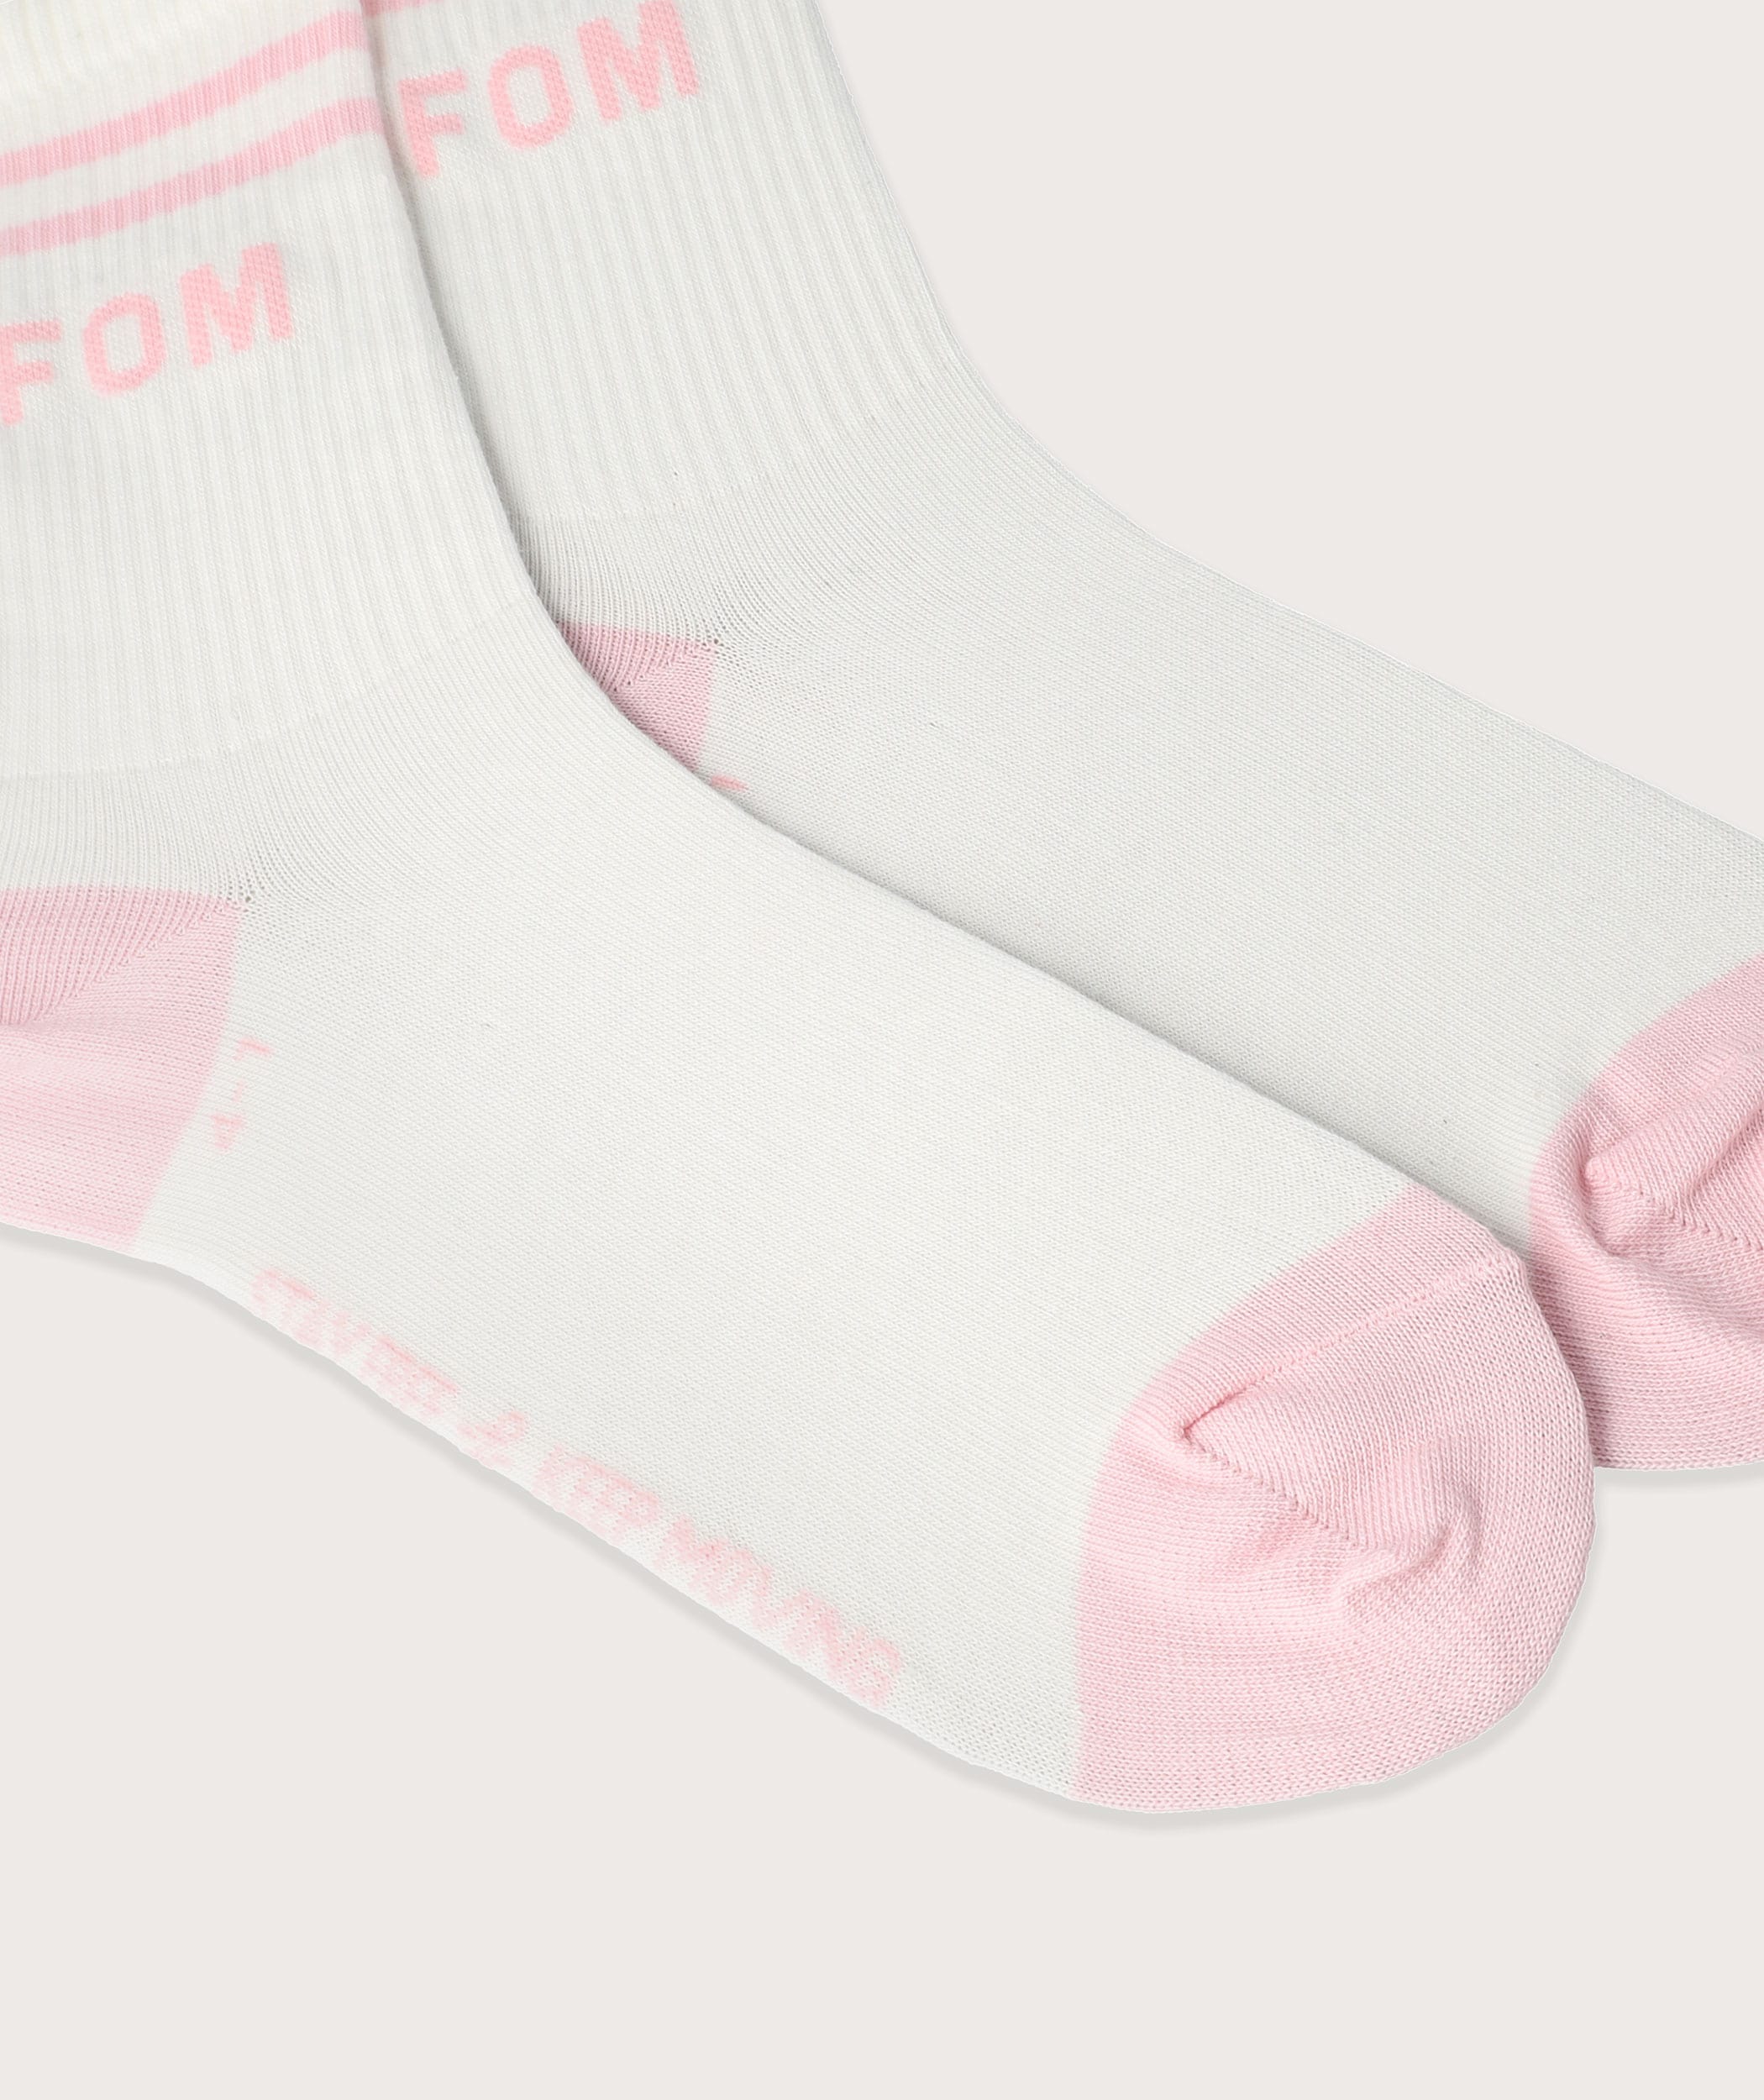 Socks FOM Crew Cream/ Blush (Size 4-7)